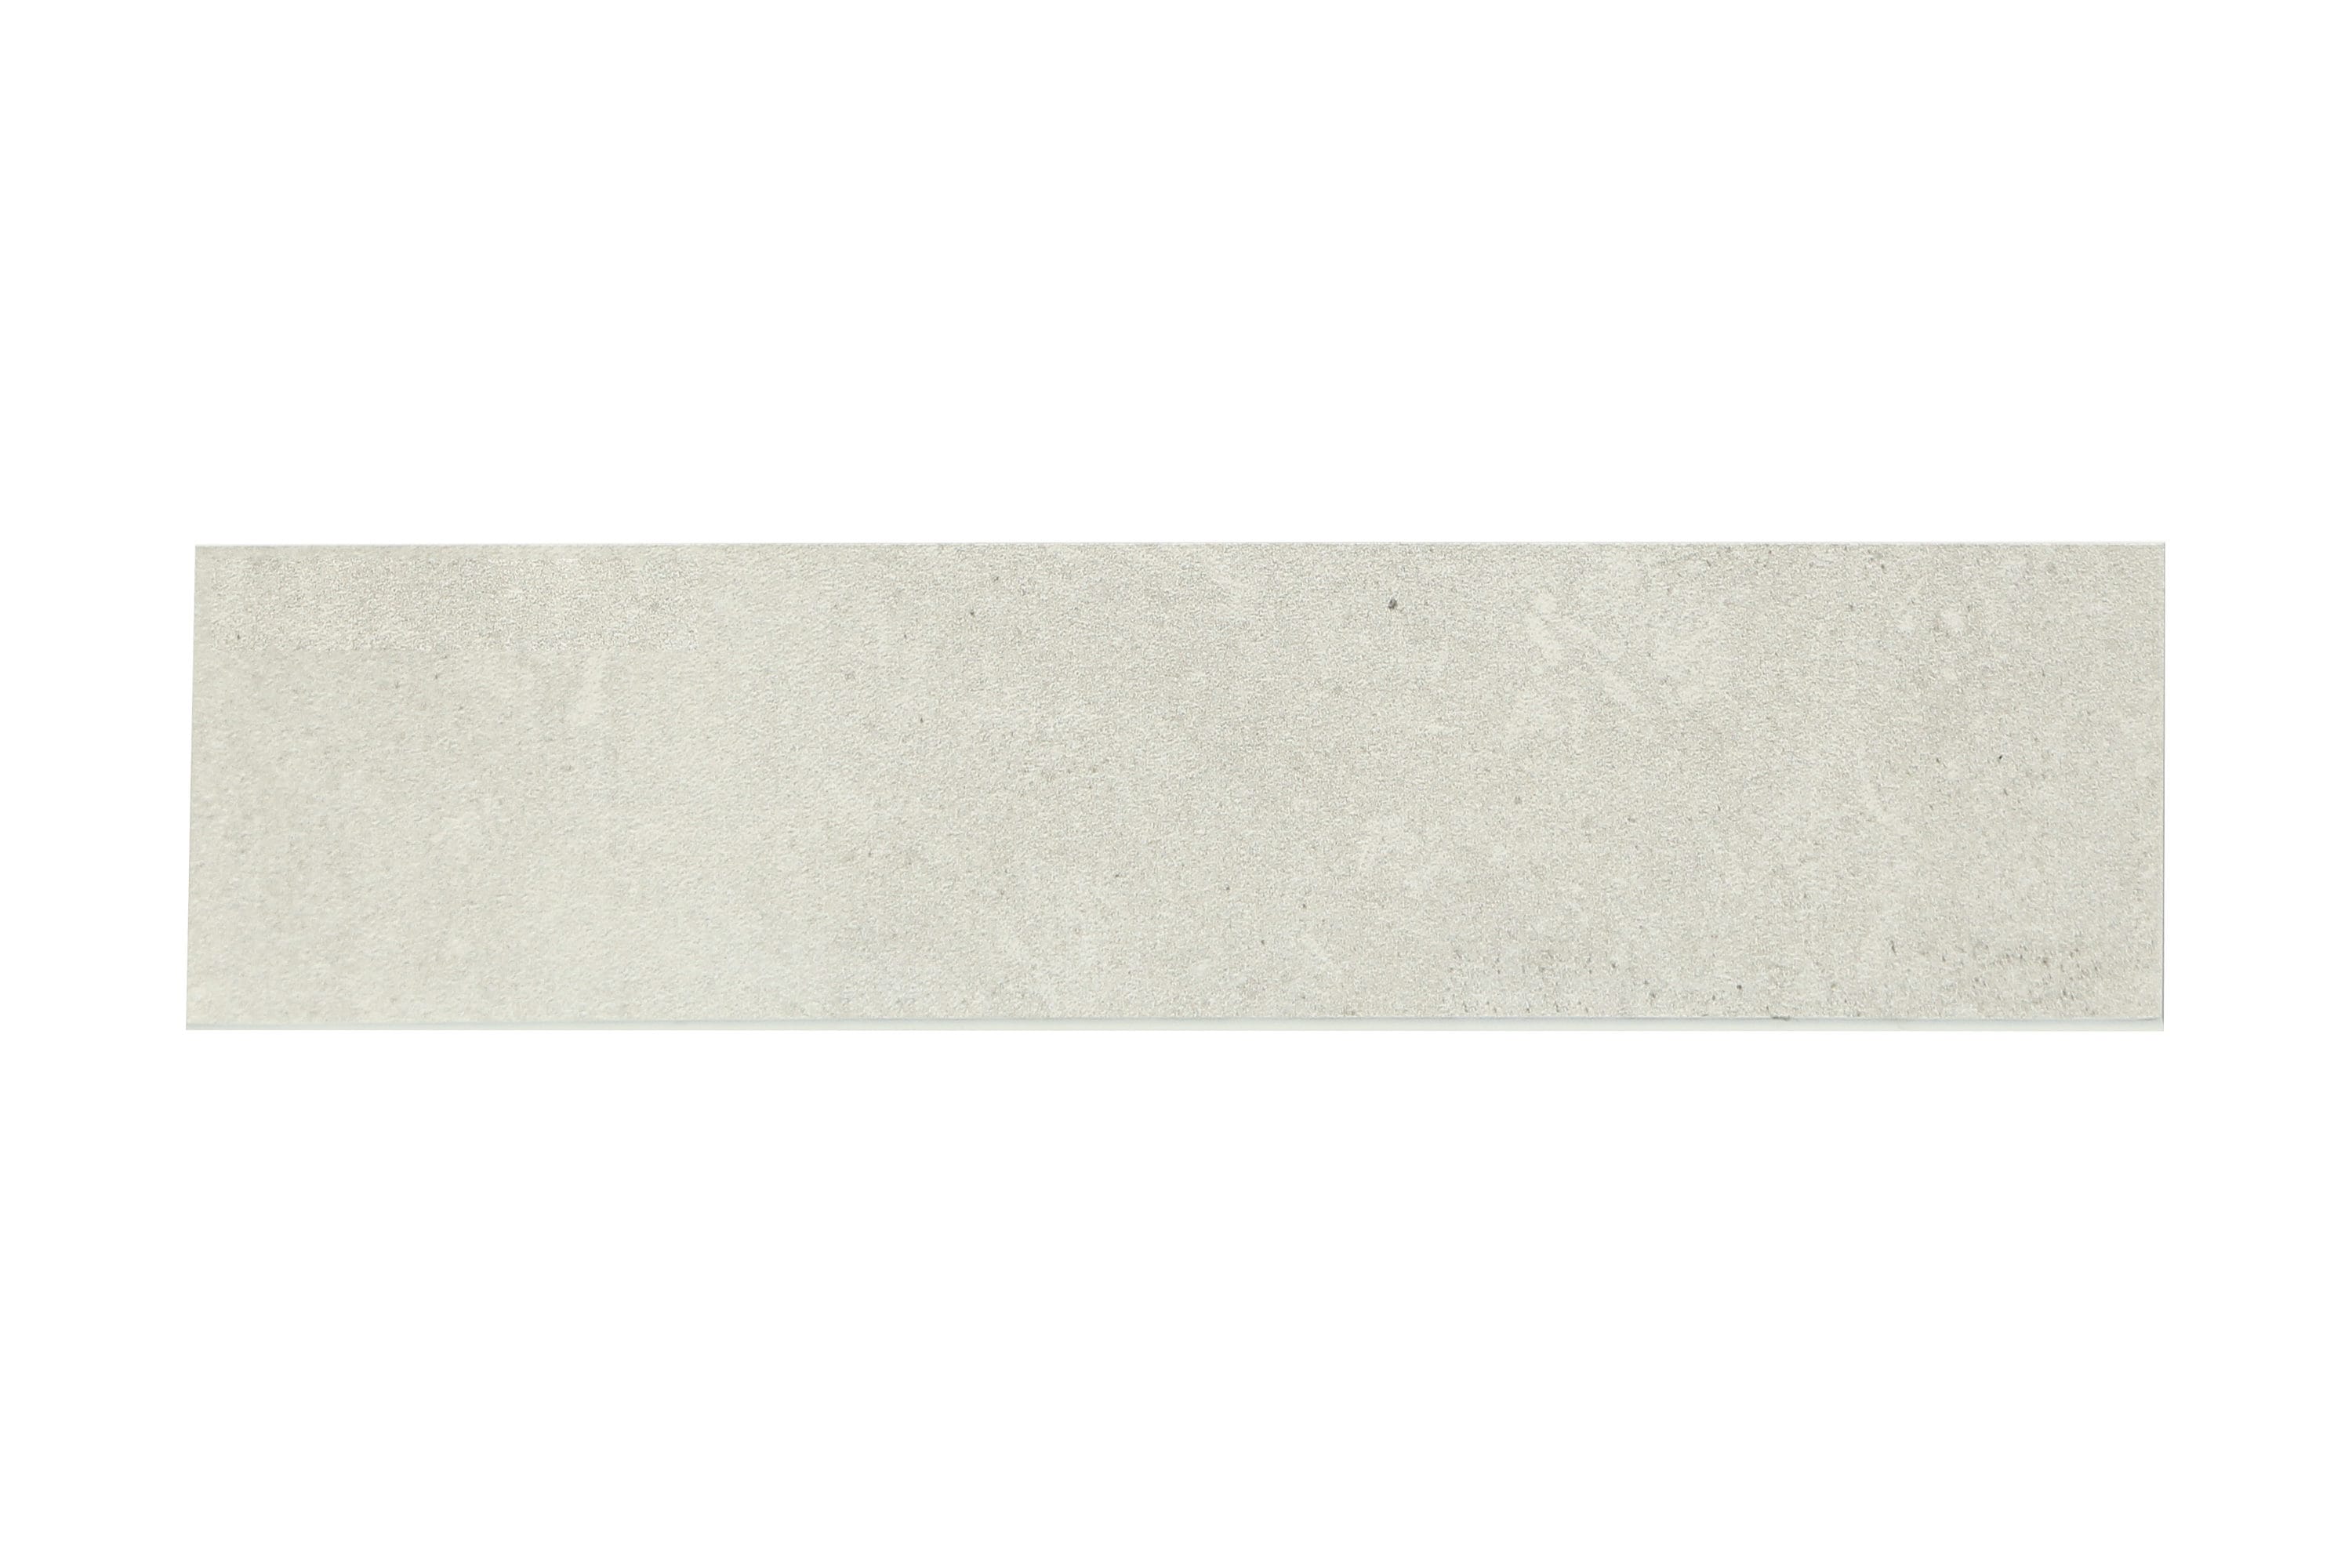 Gallery Cream 3-in x 12-in Porcelain Bullnose Tile (0.23-sq. ft/ Piece) in Light | - GBI Tile & Stone Inc. 1694013